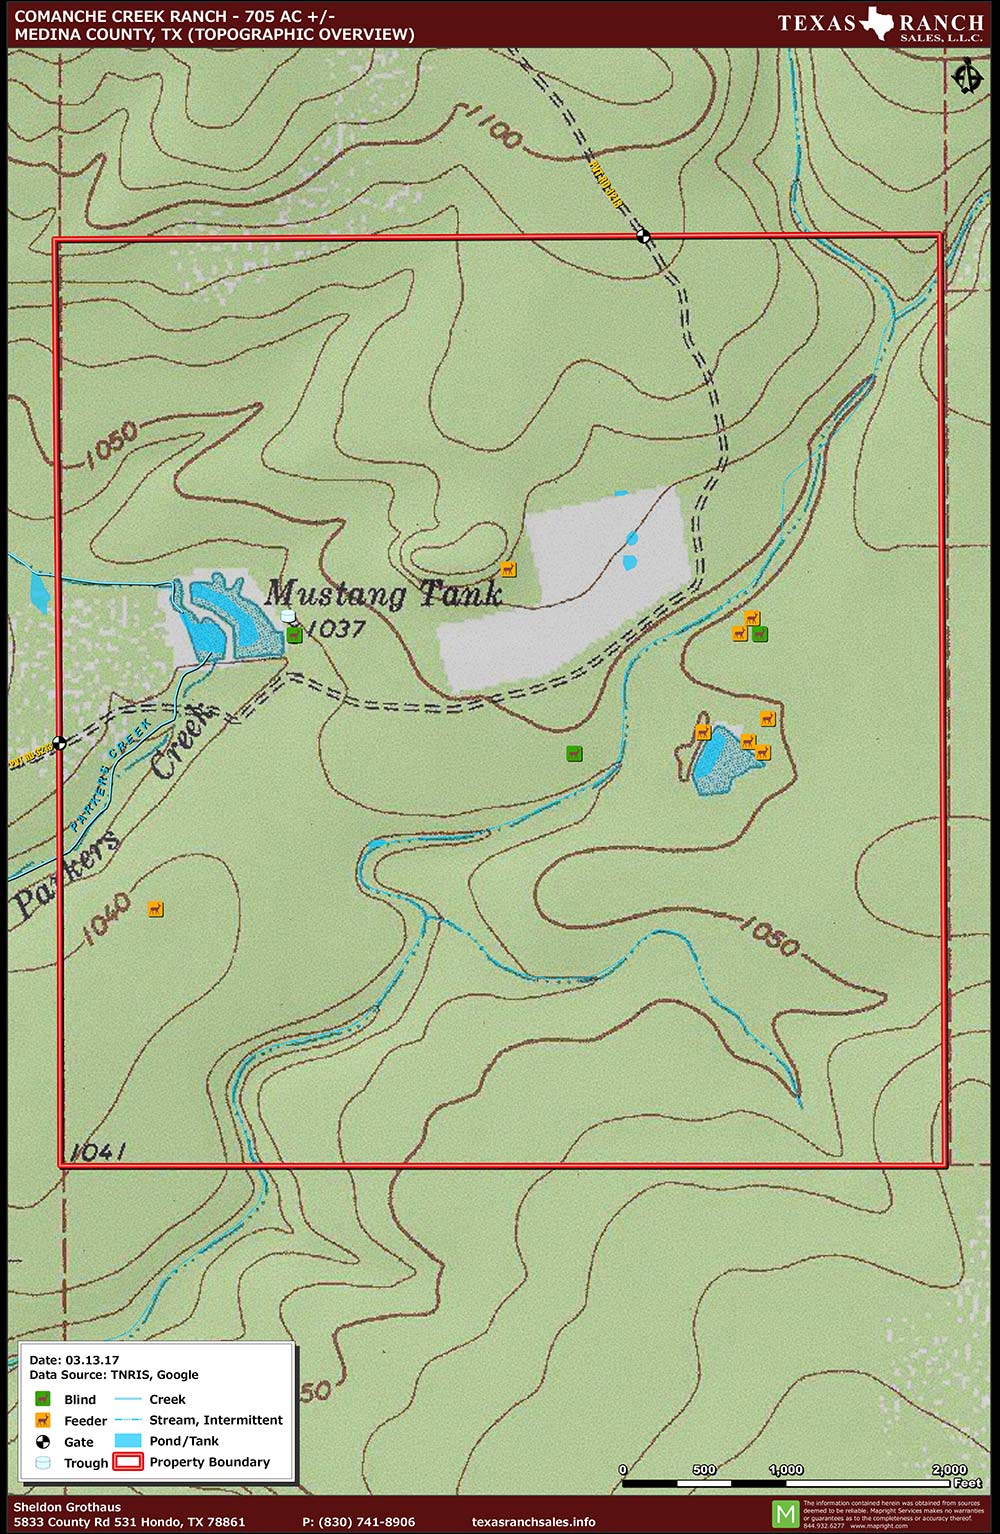 705 Acre Ranch Medina Topography Map